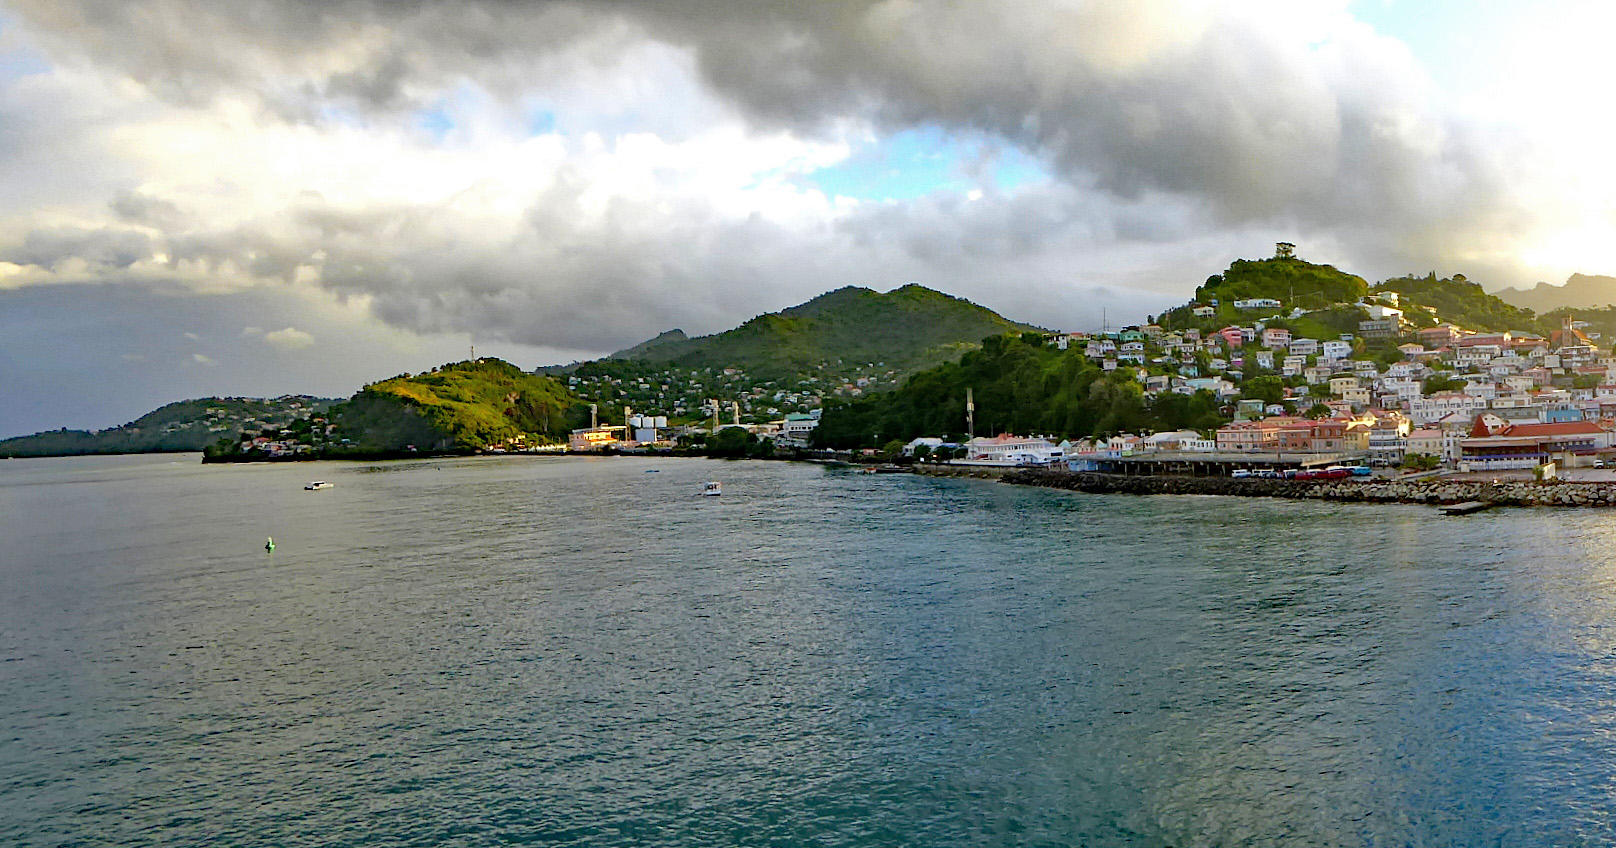 Docked in St. Georges, Grenada